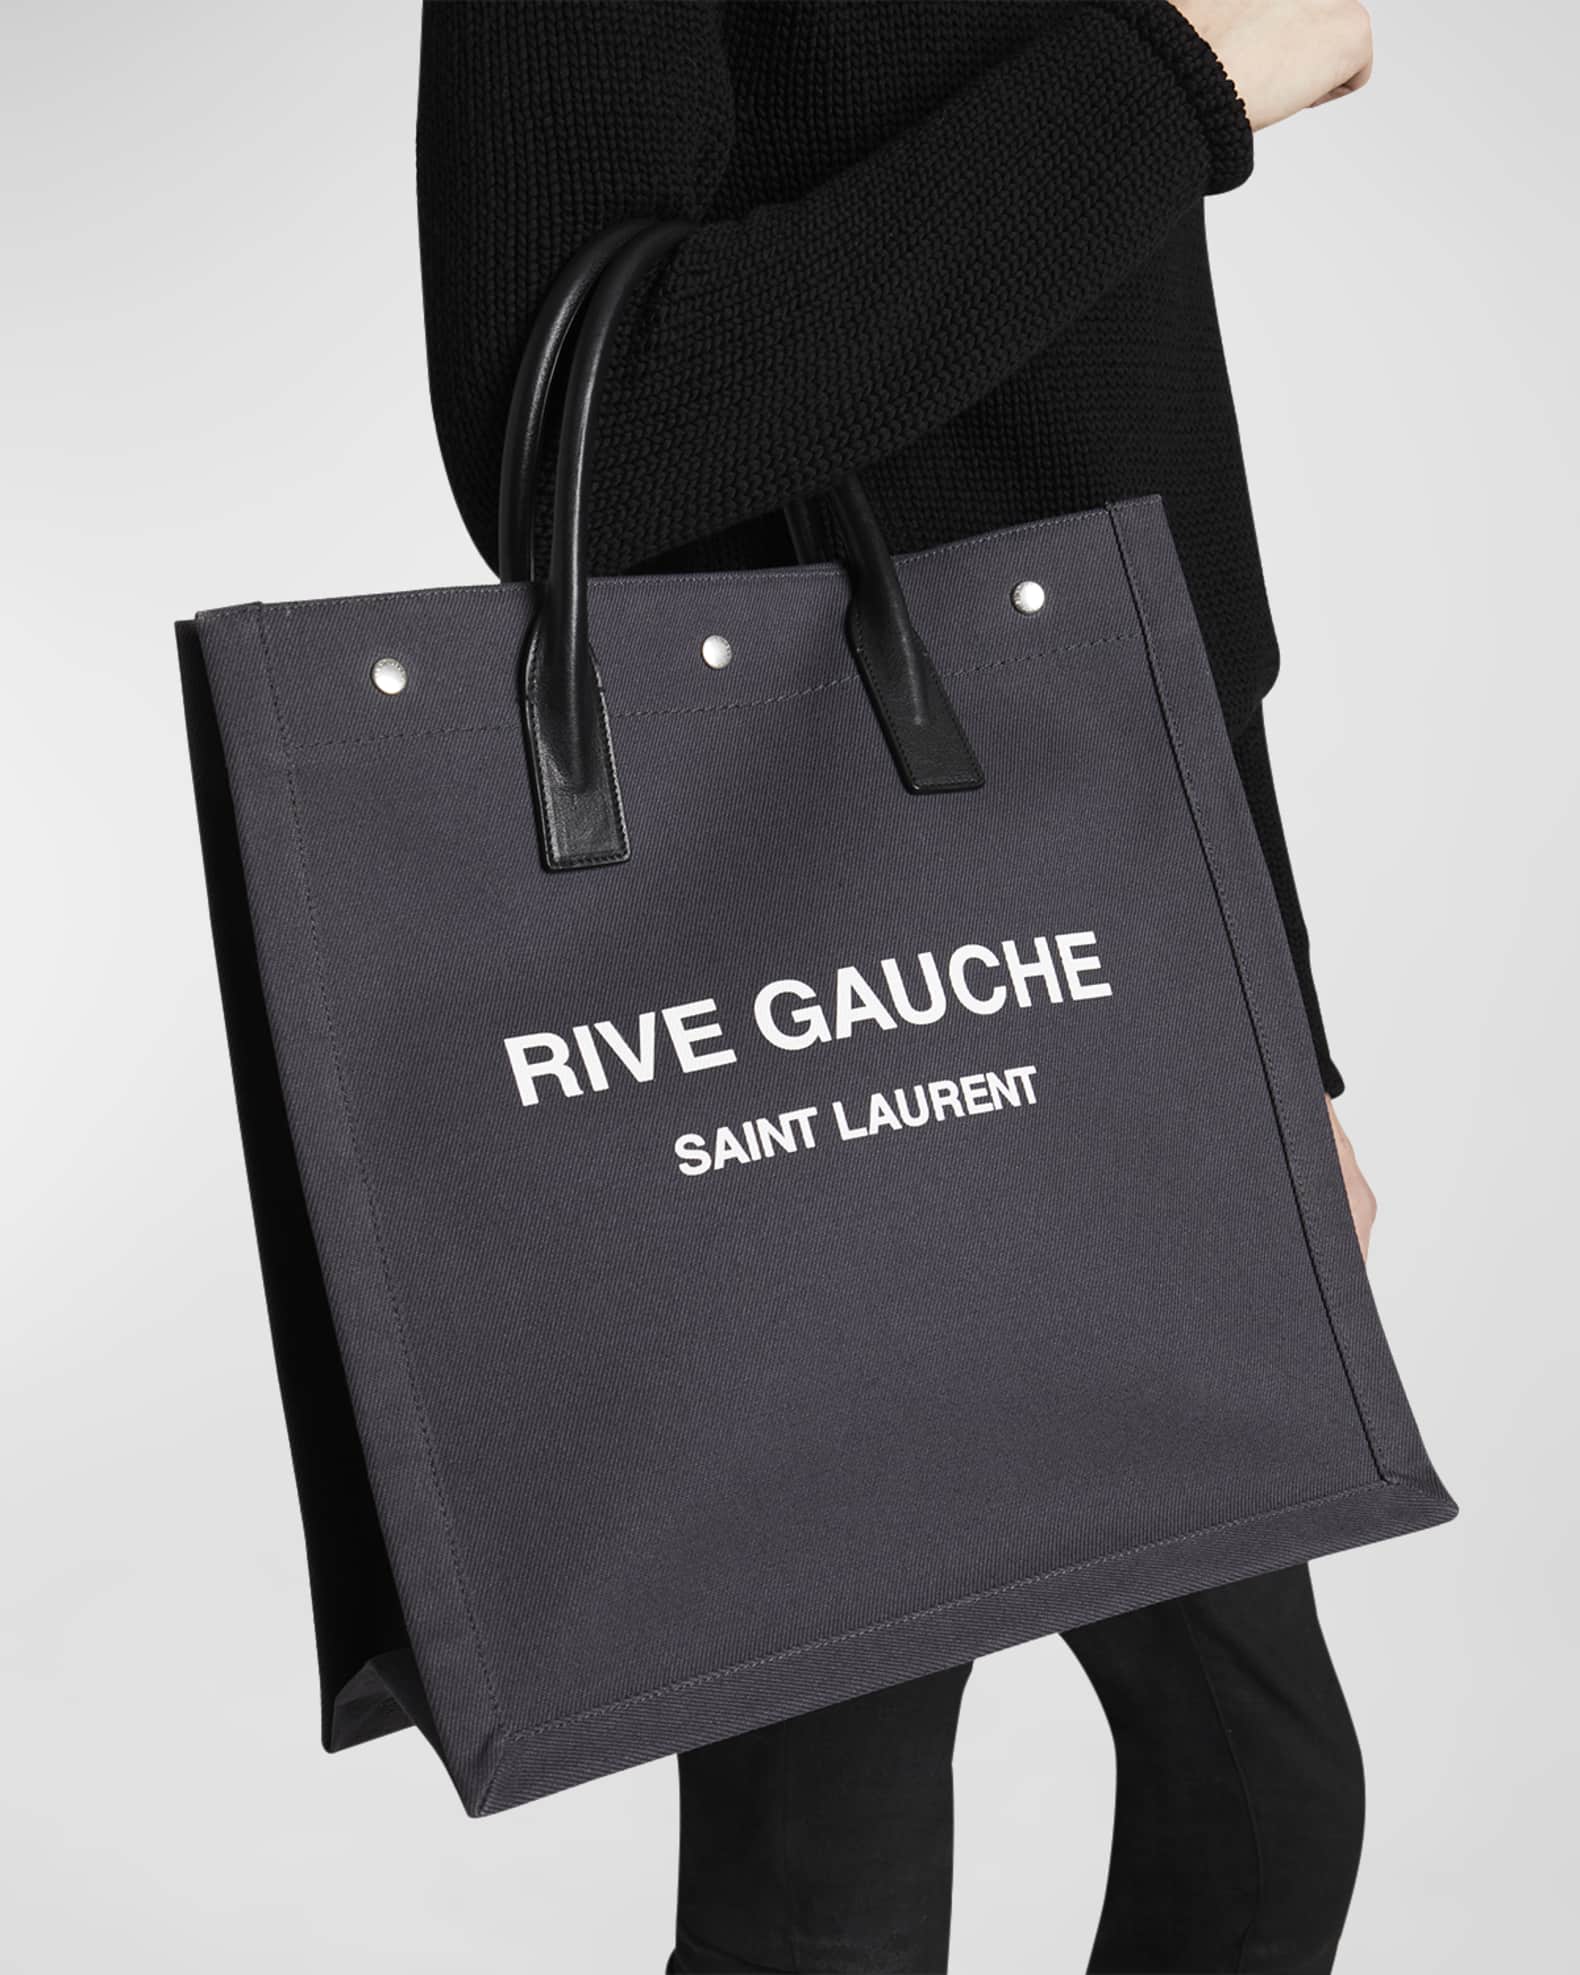 SAINT LAURENT, 'RIVE GAUCHE' CANVAS WEEKENDER TOTE BAG